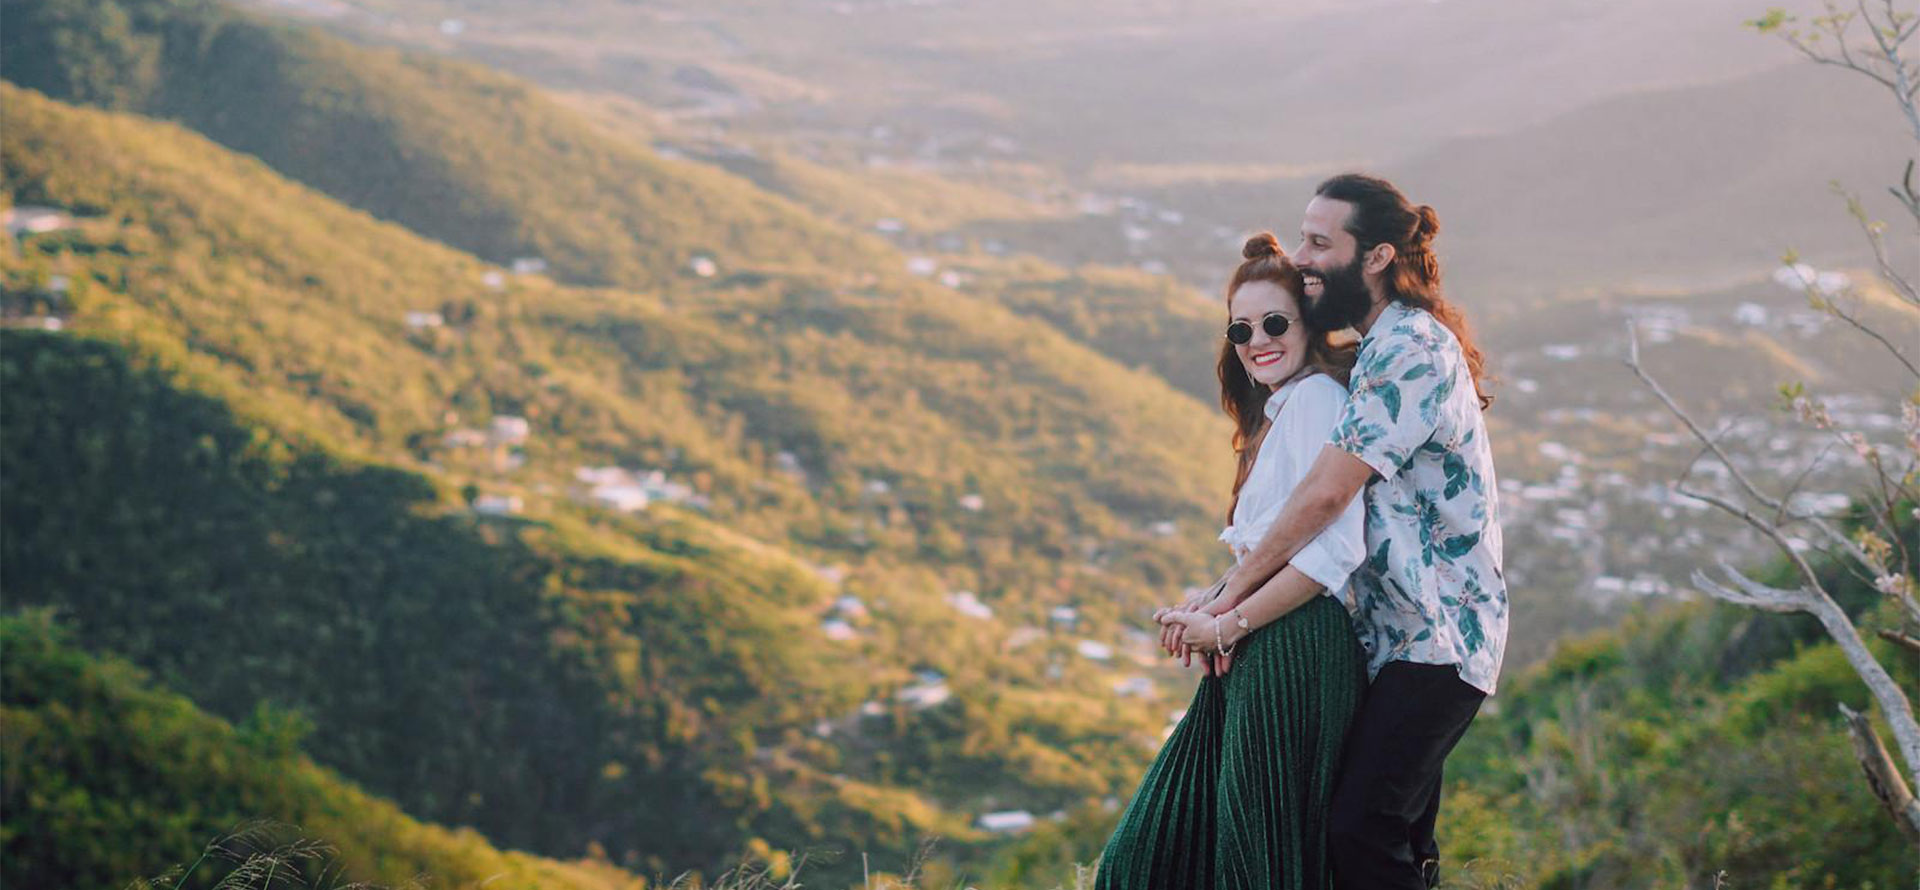 Puerto rico honeymoon resorts couple.